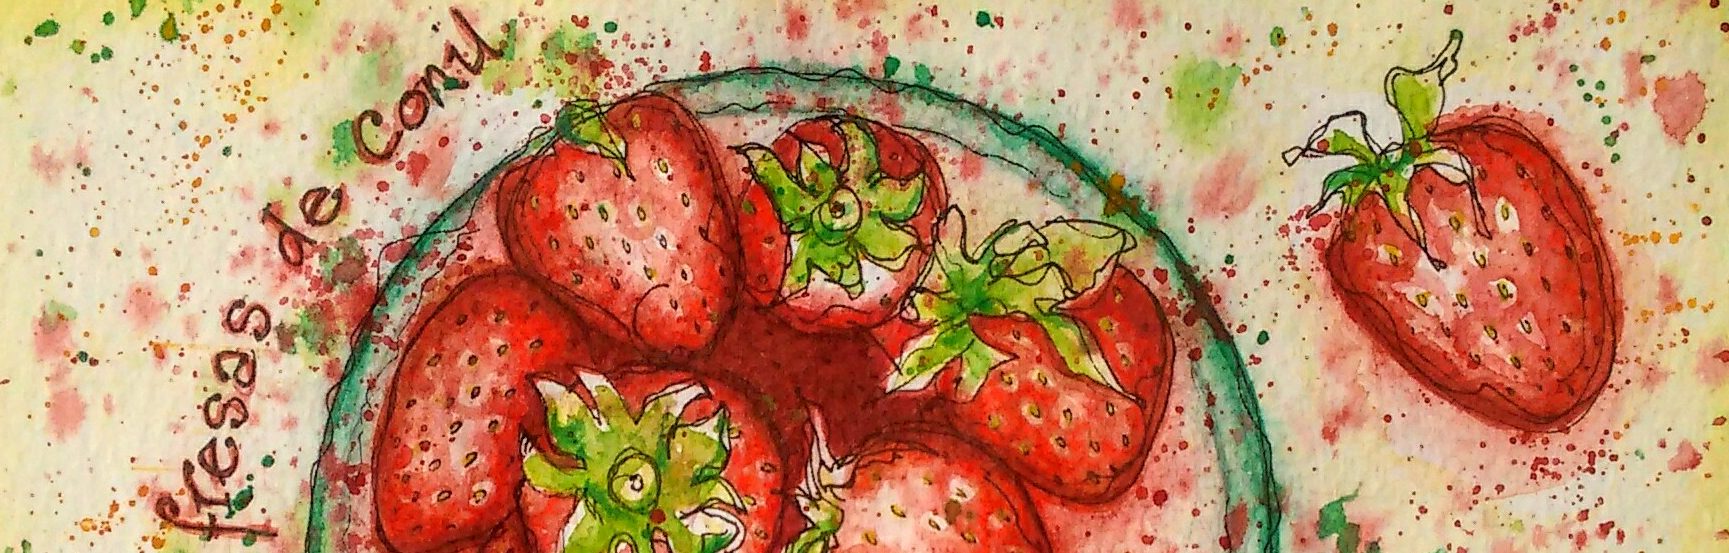 strawberries, strawberry, fruit, fresa, fresas, conil, fruta, pen and watercolour, watercolour, water color, sketch, food, illustration, ilustracion, primavera, spring